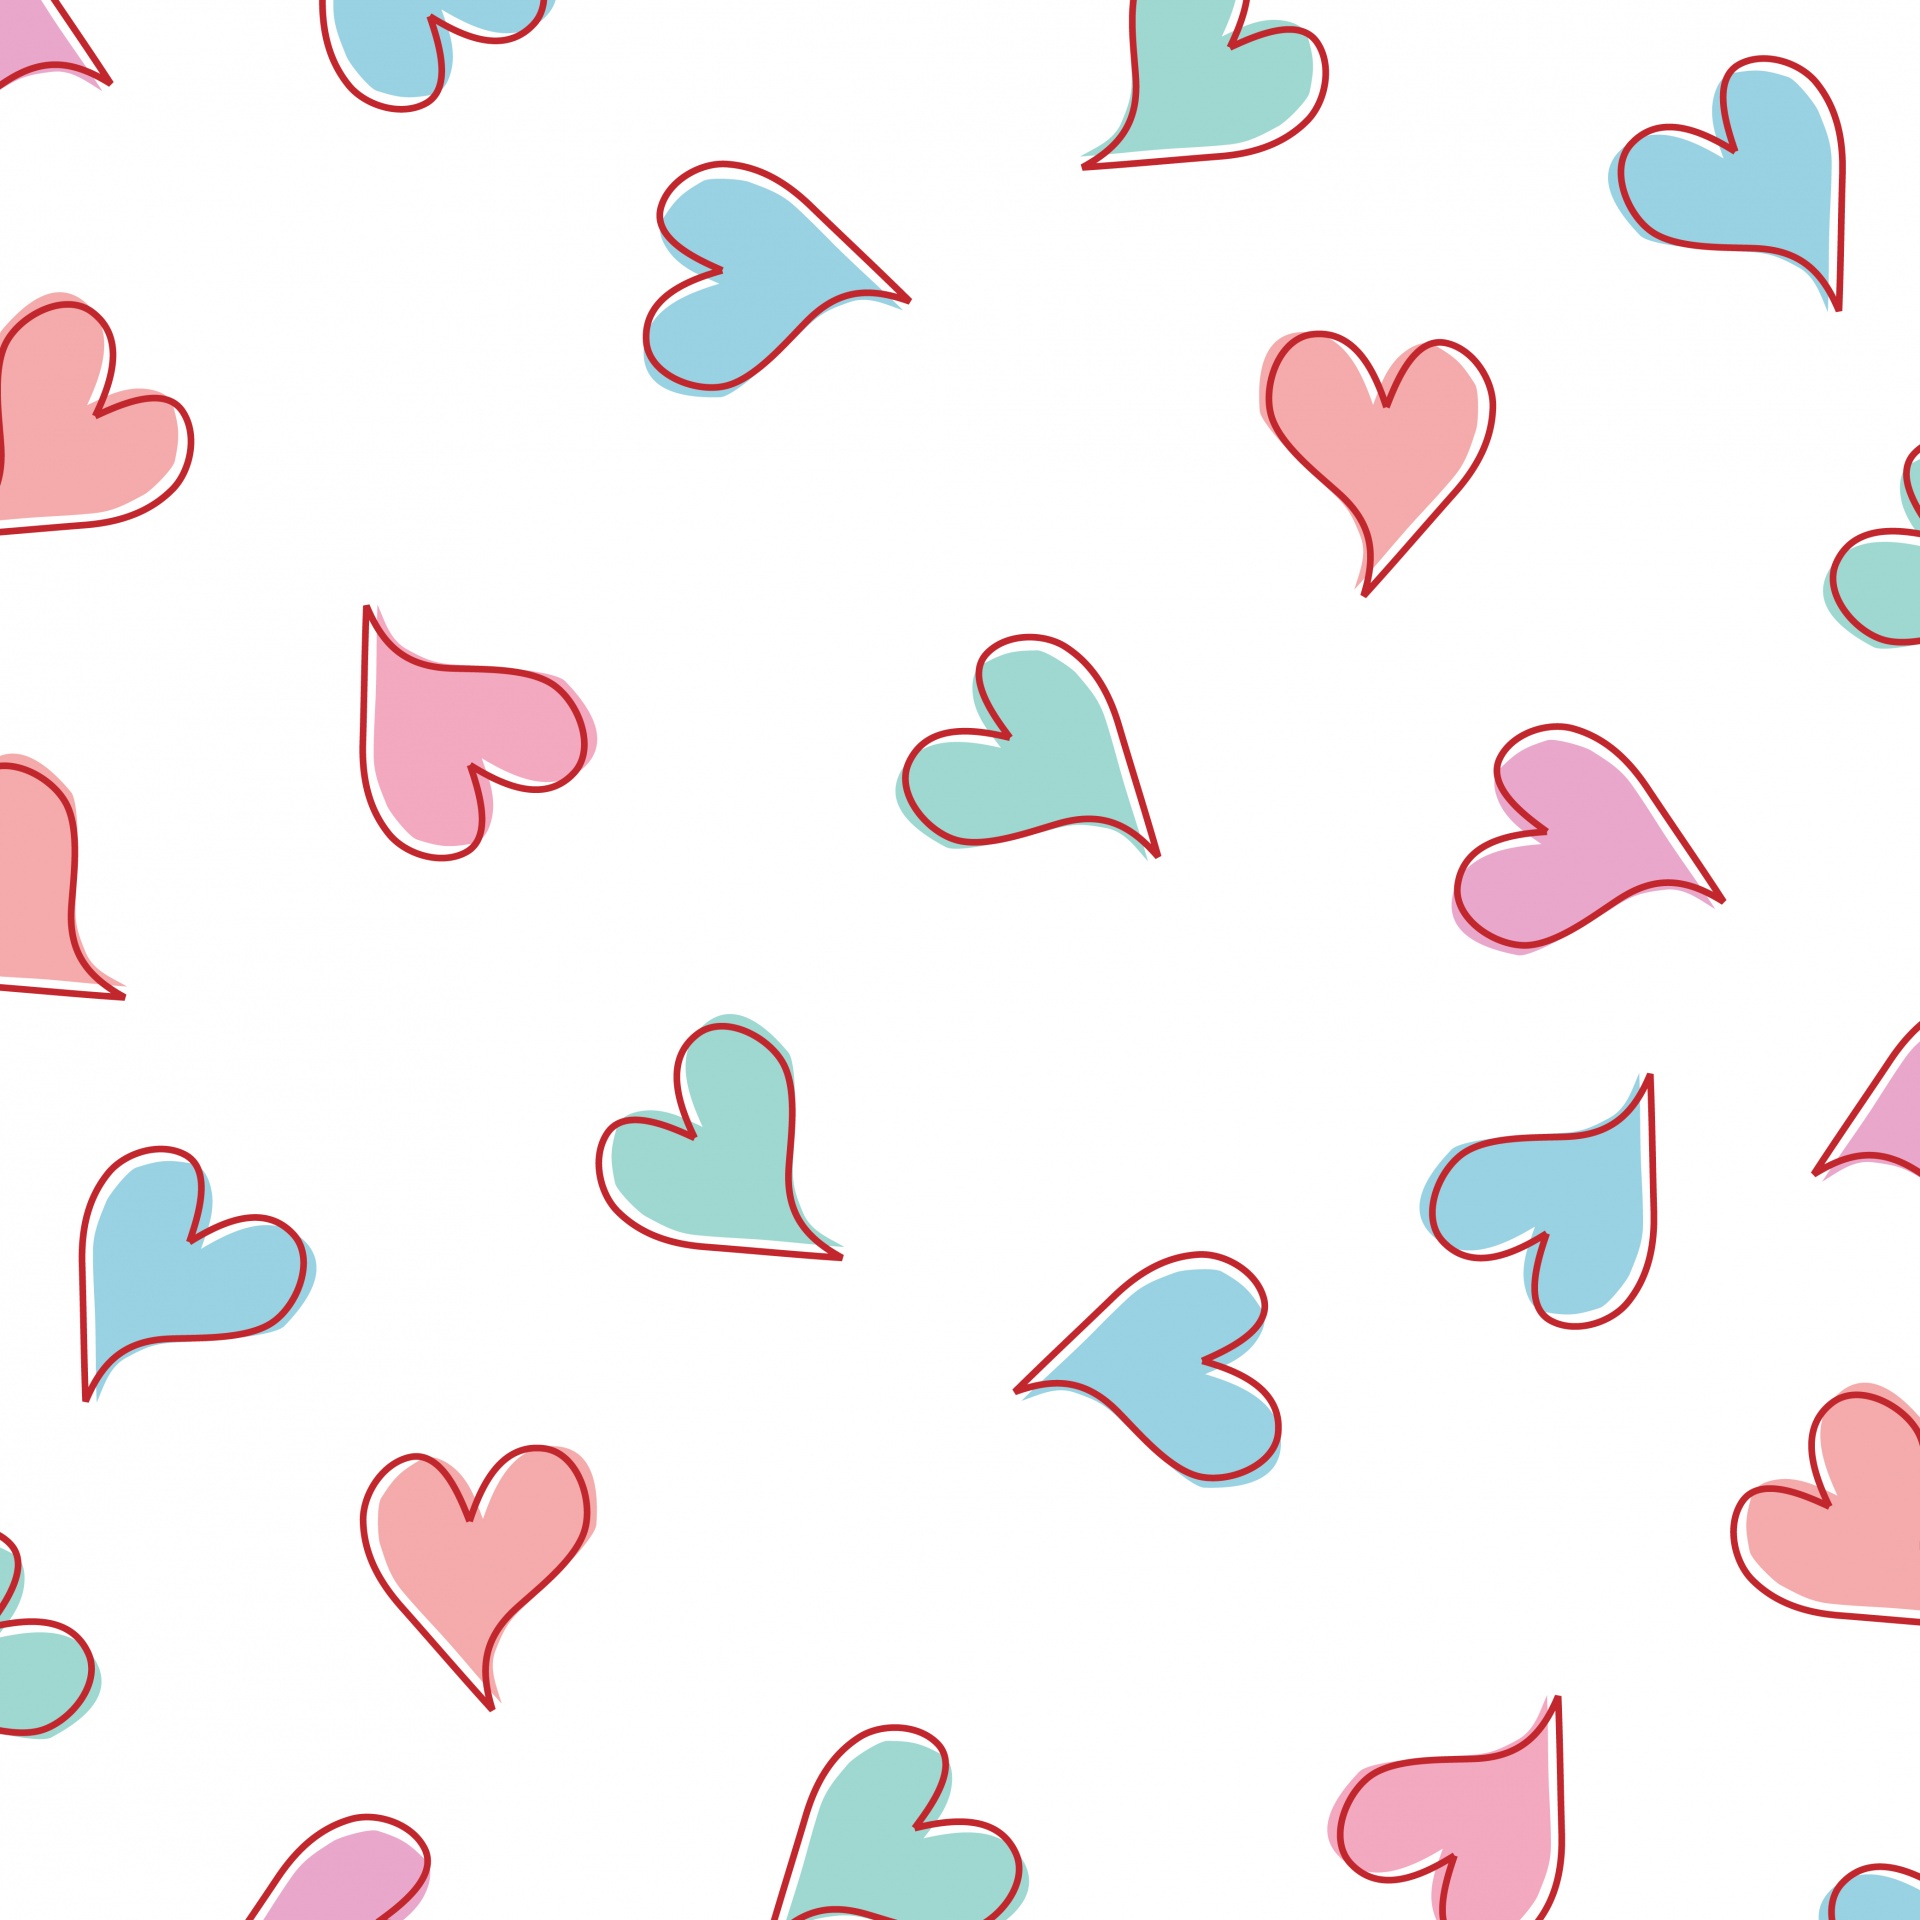 Colorful random hearts wallpaper background